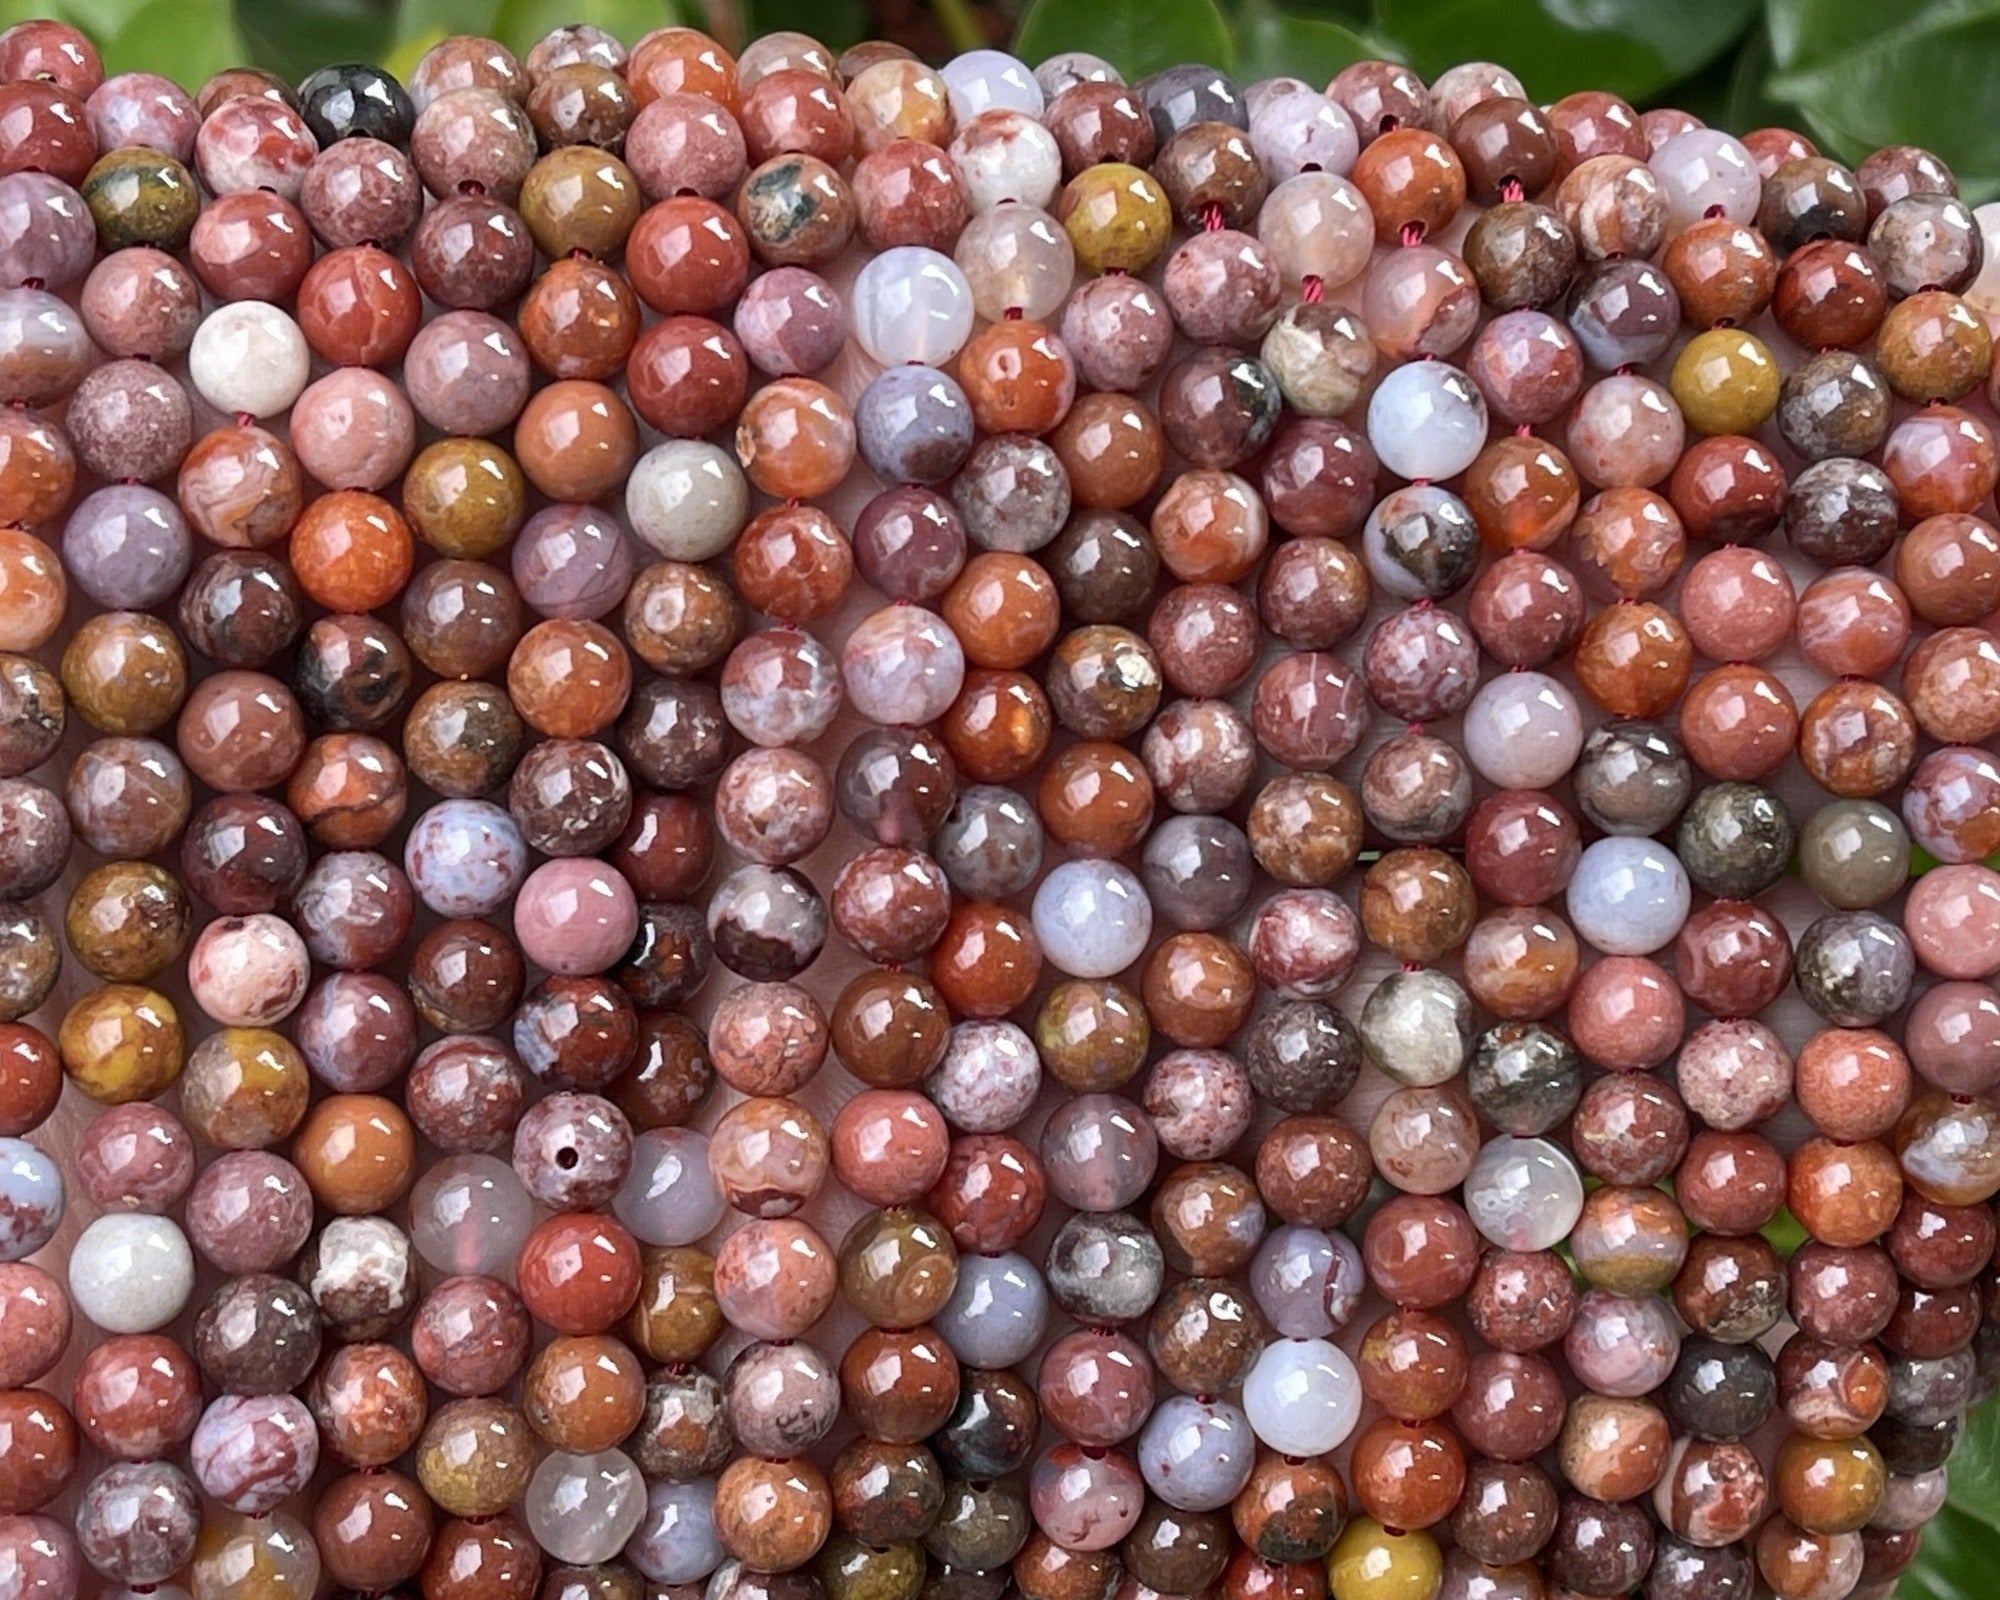 Portuguese Agate 6mm round natural gemstone beads 15.5" strand